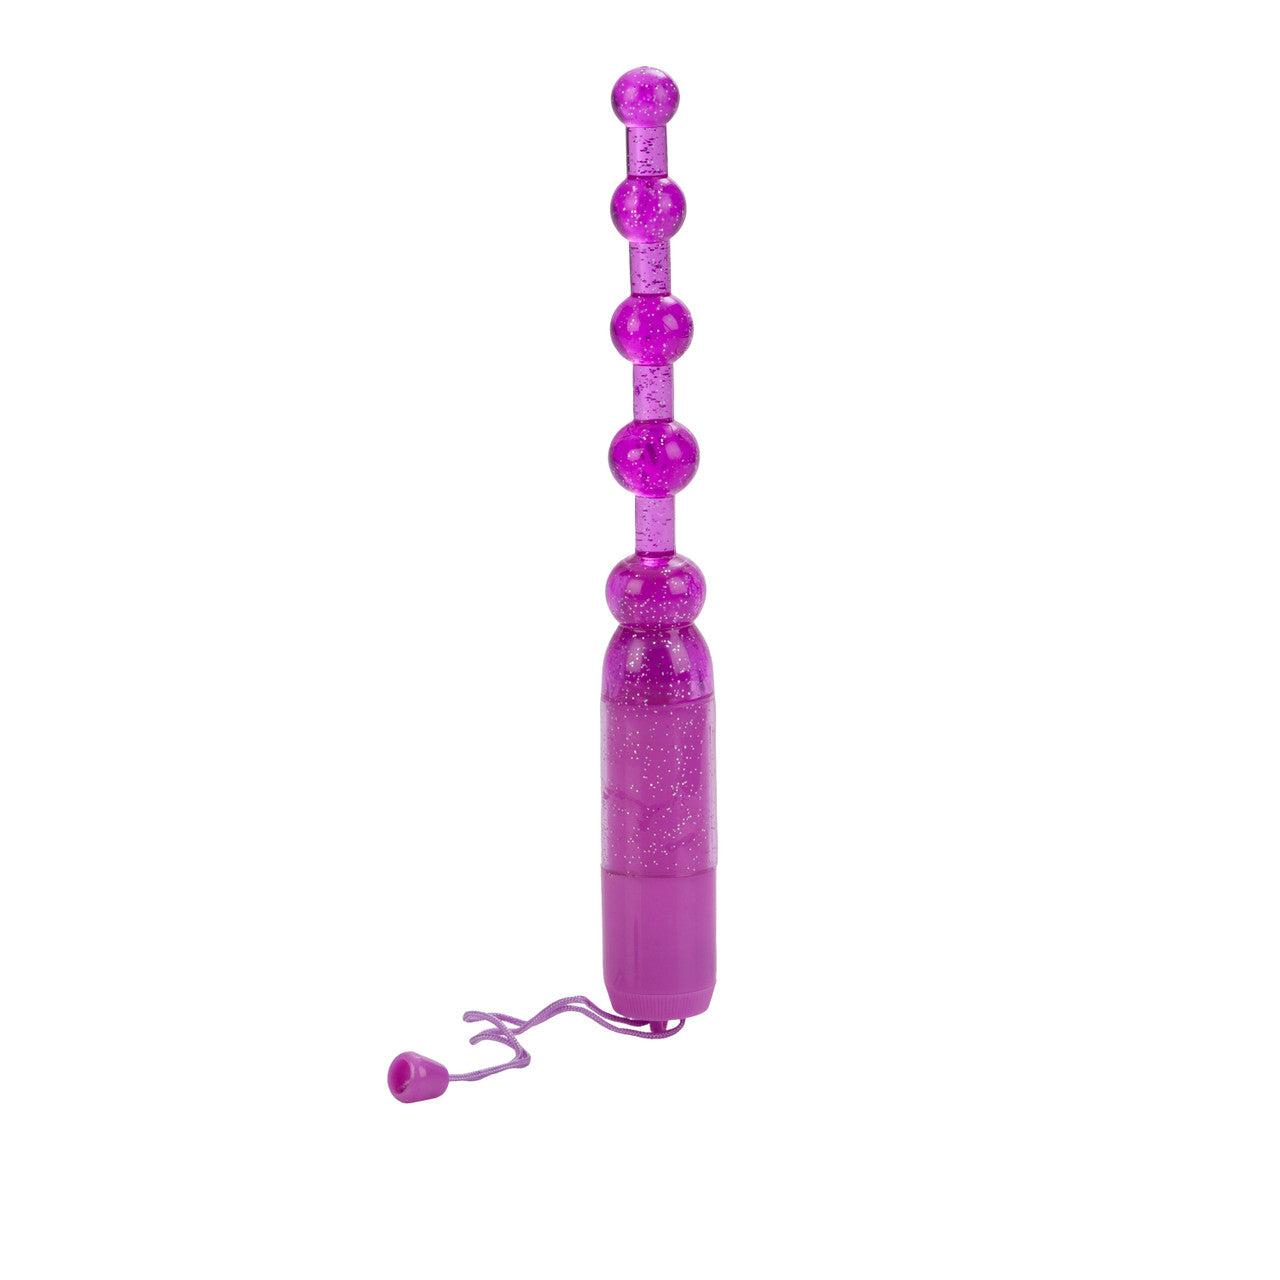 Waterproof Vibrating Pleasure Beads - Purple - Thorn & Feather